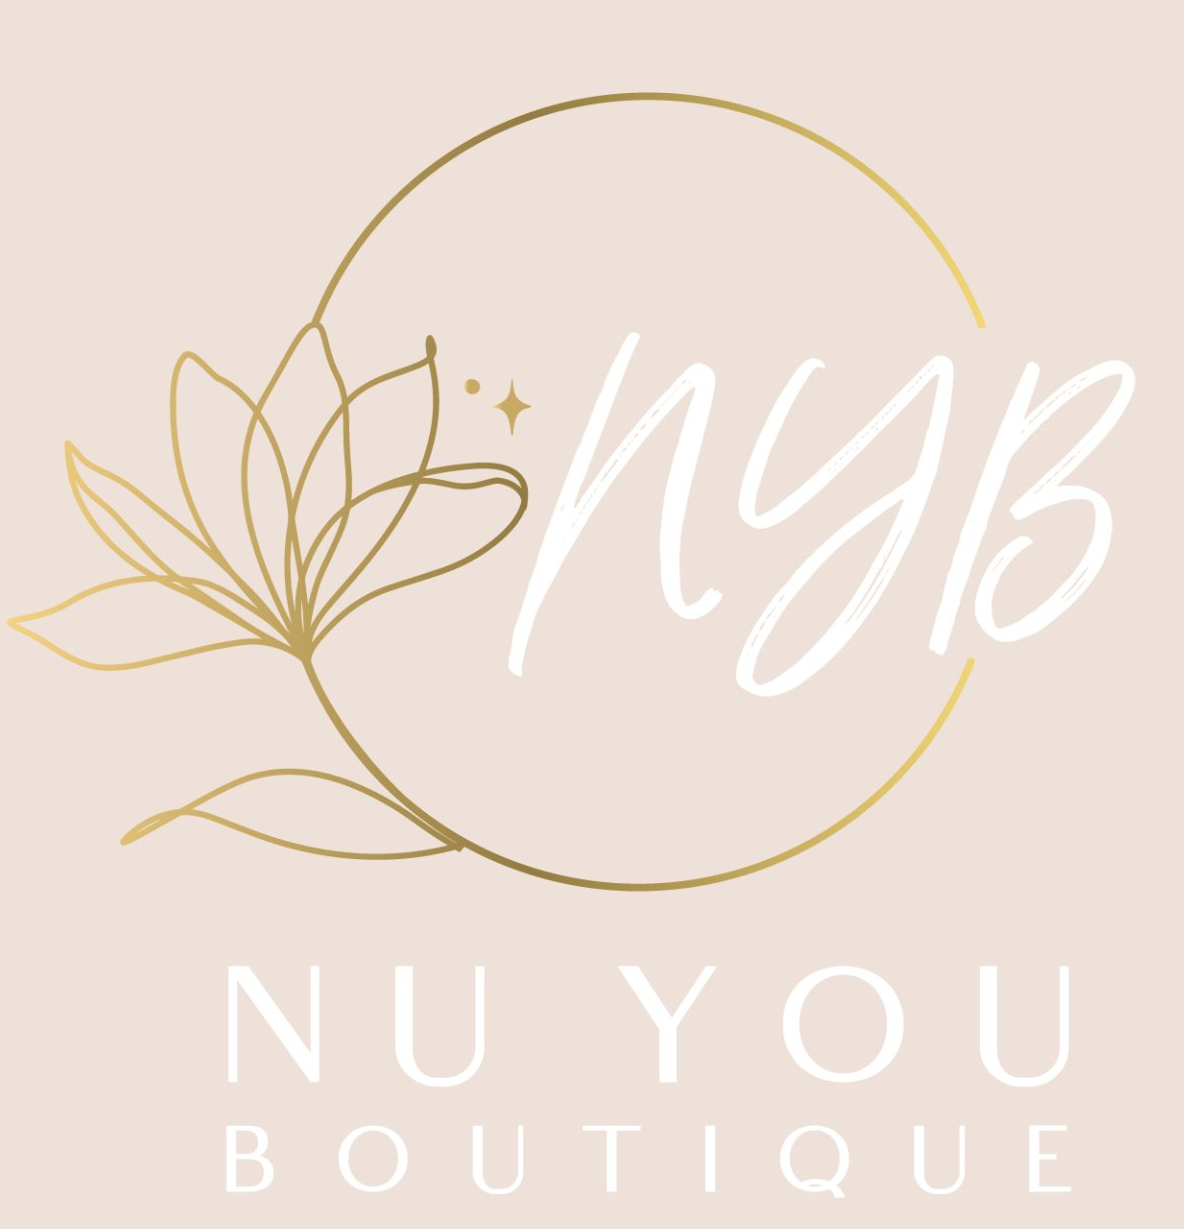 NU You Boutique logo